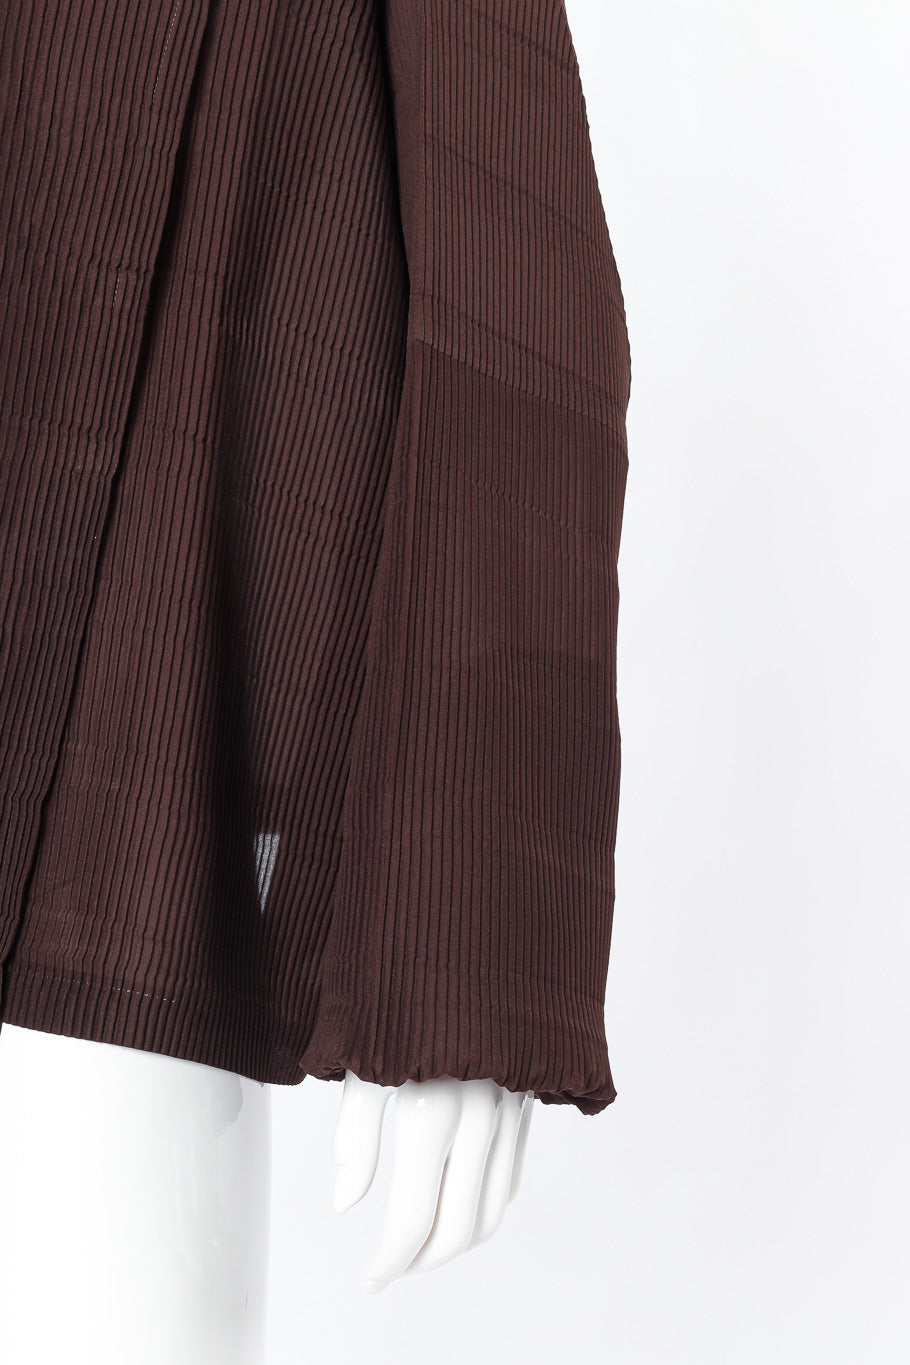 Issey Miyake Fete Stripe Like Pleats Pullover sleeve closeup on mannequin @Recessla